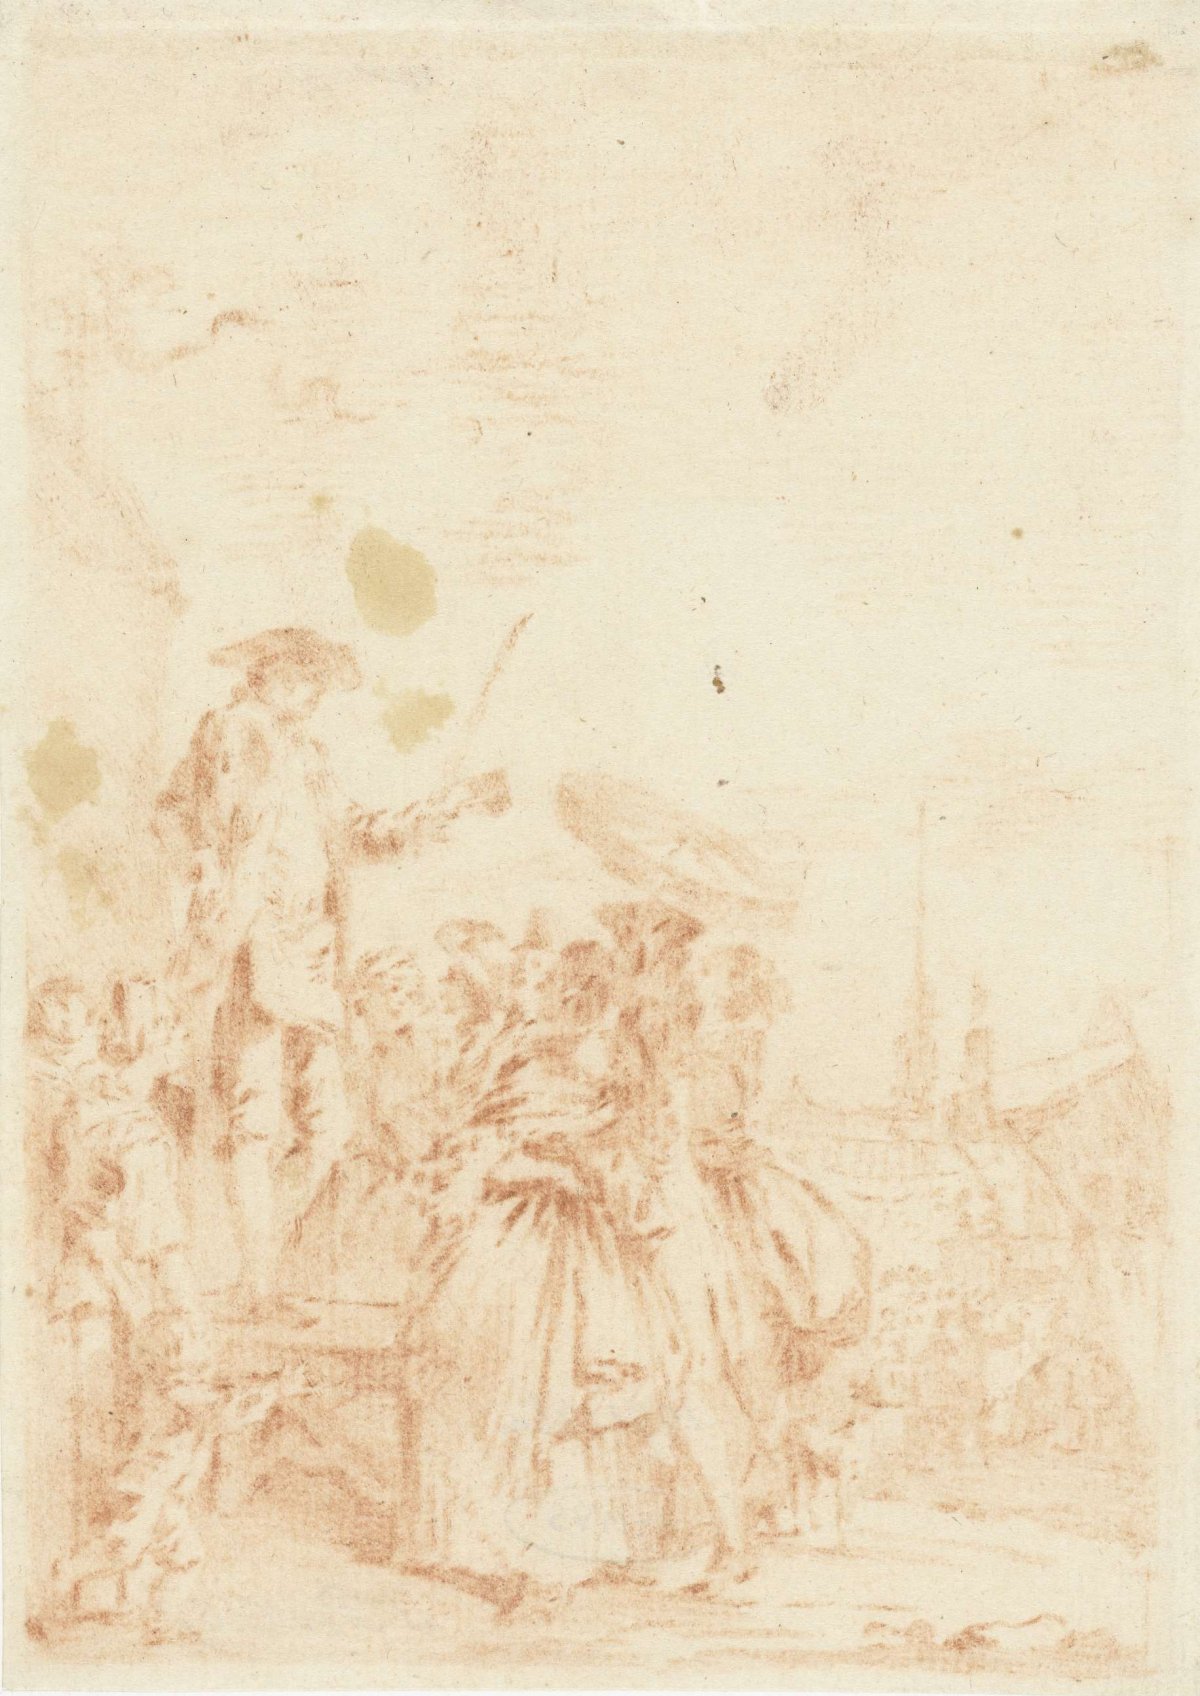 Market vendor with elegant crowd, Jacob Perkois, 1766 - 1804